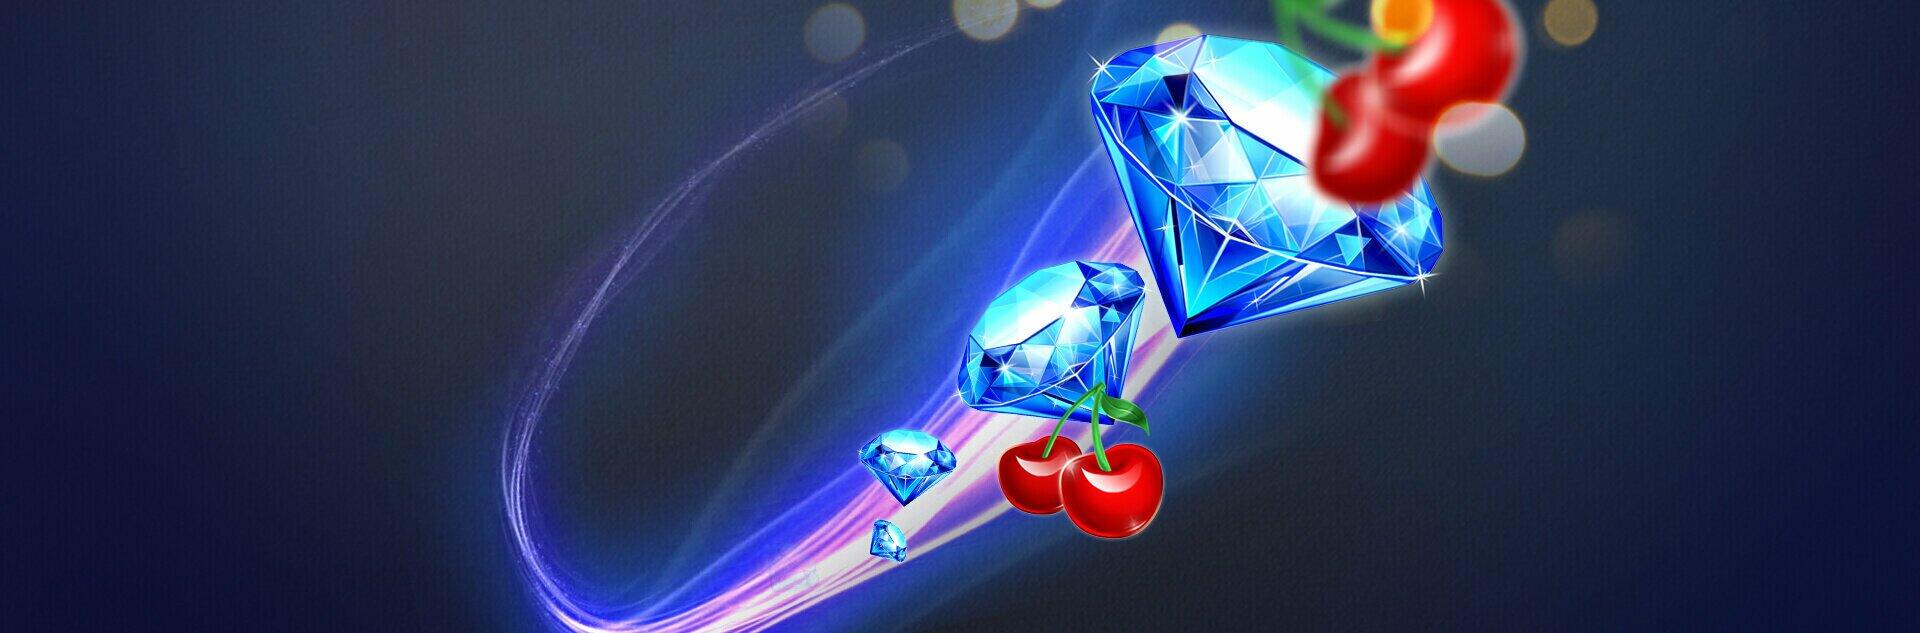 Blue Diamond Slot